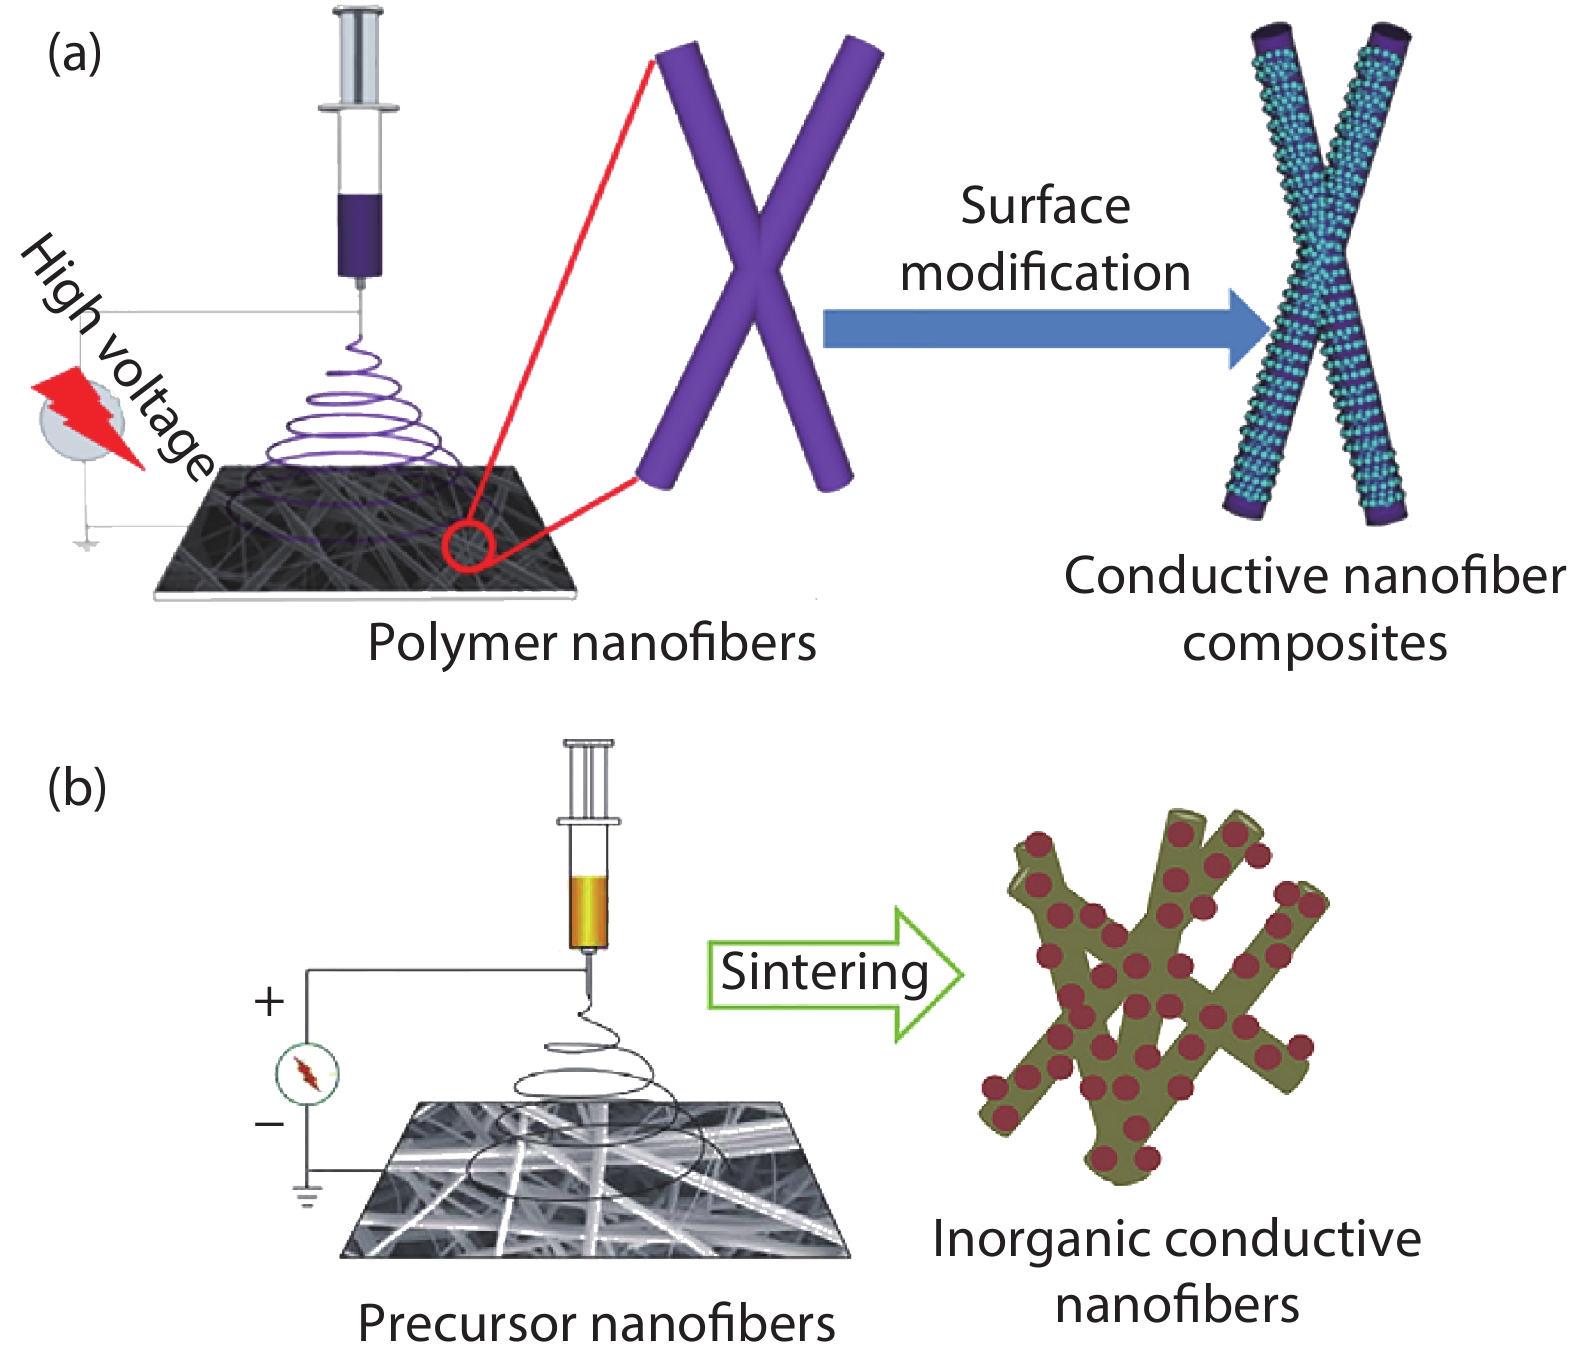 (Color online) (a) Flowchart for preparing conductive nanofibers by surface modification[18]. (b) Flowchart for preparing conductive nanofibers by heat treatment[17].